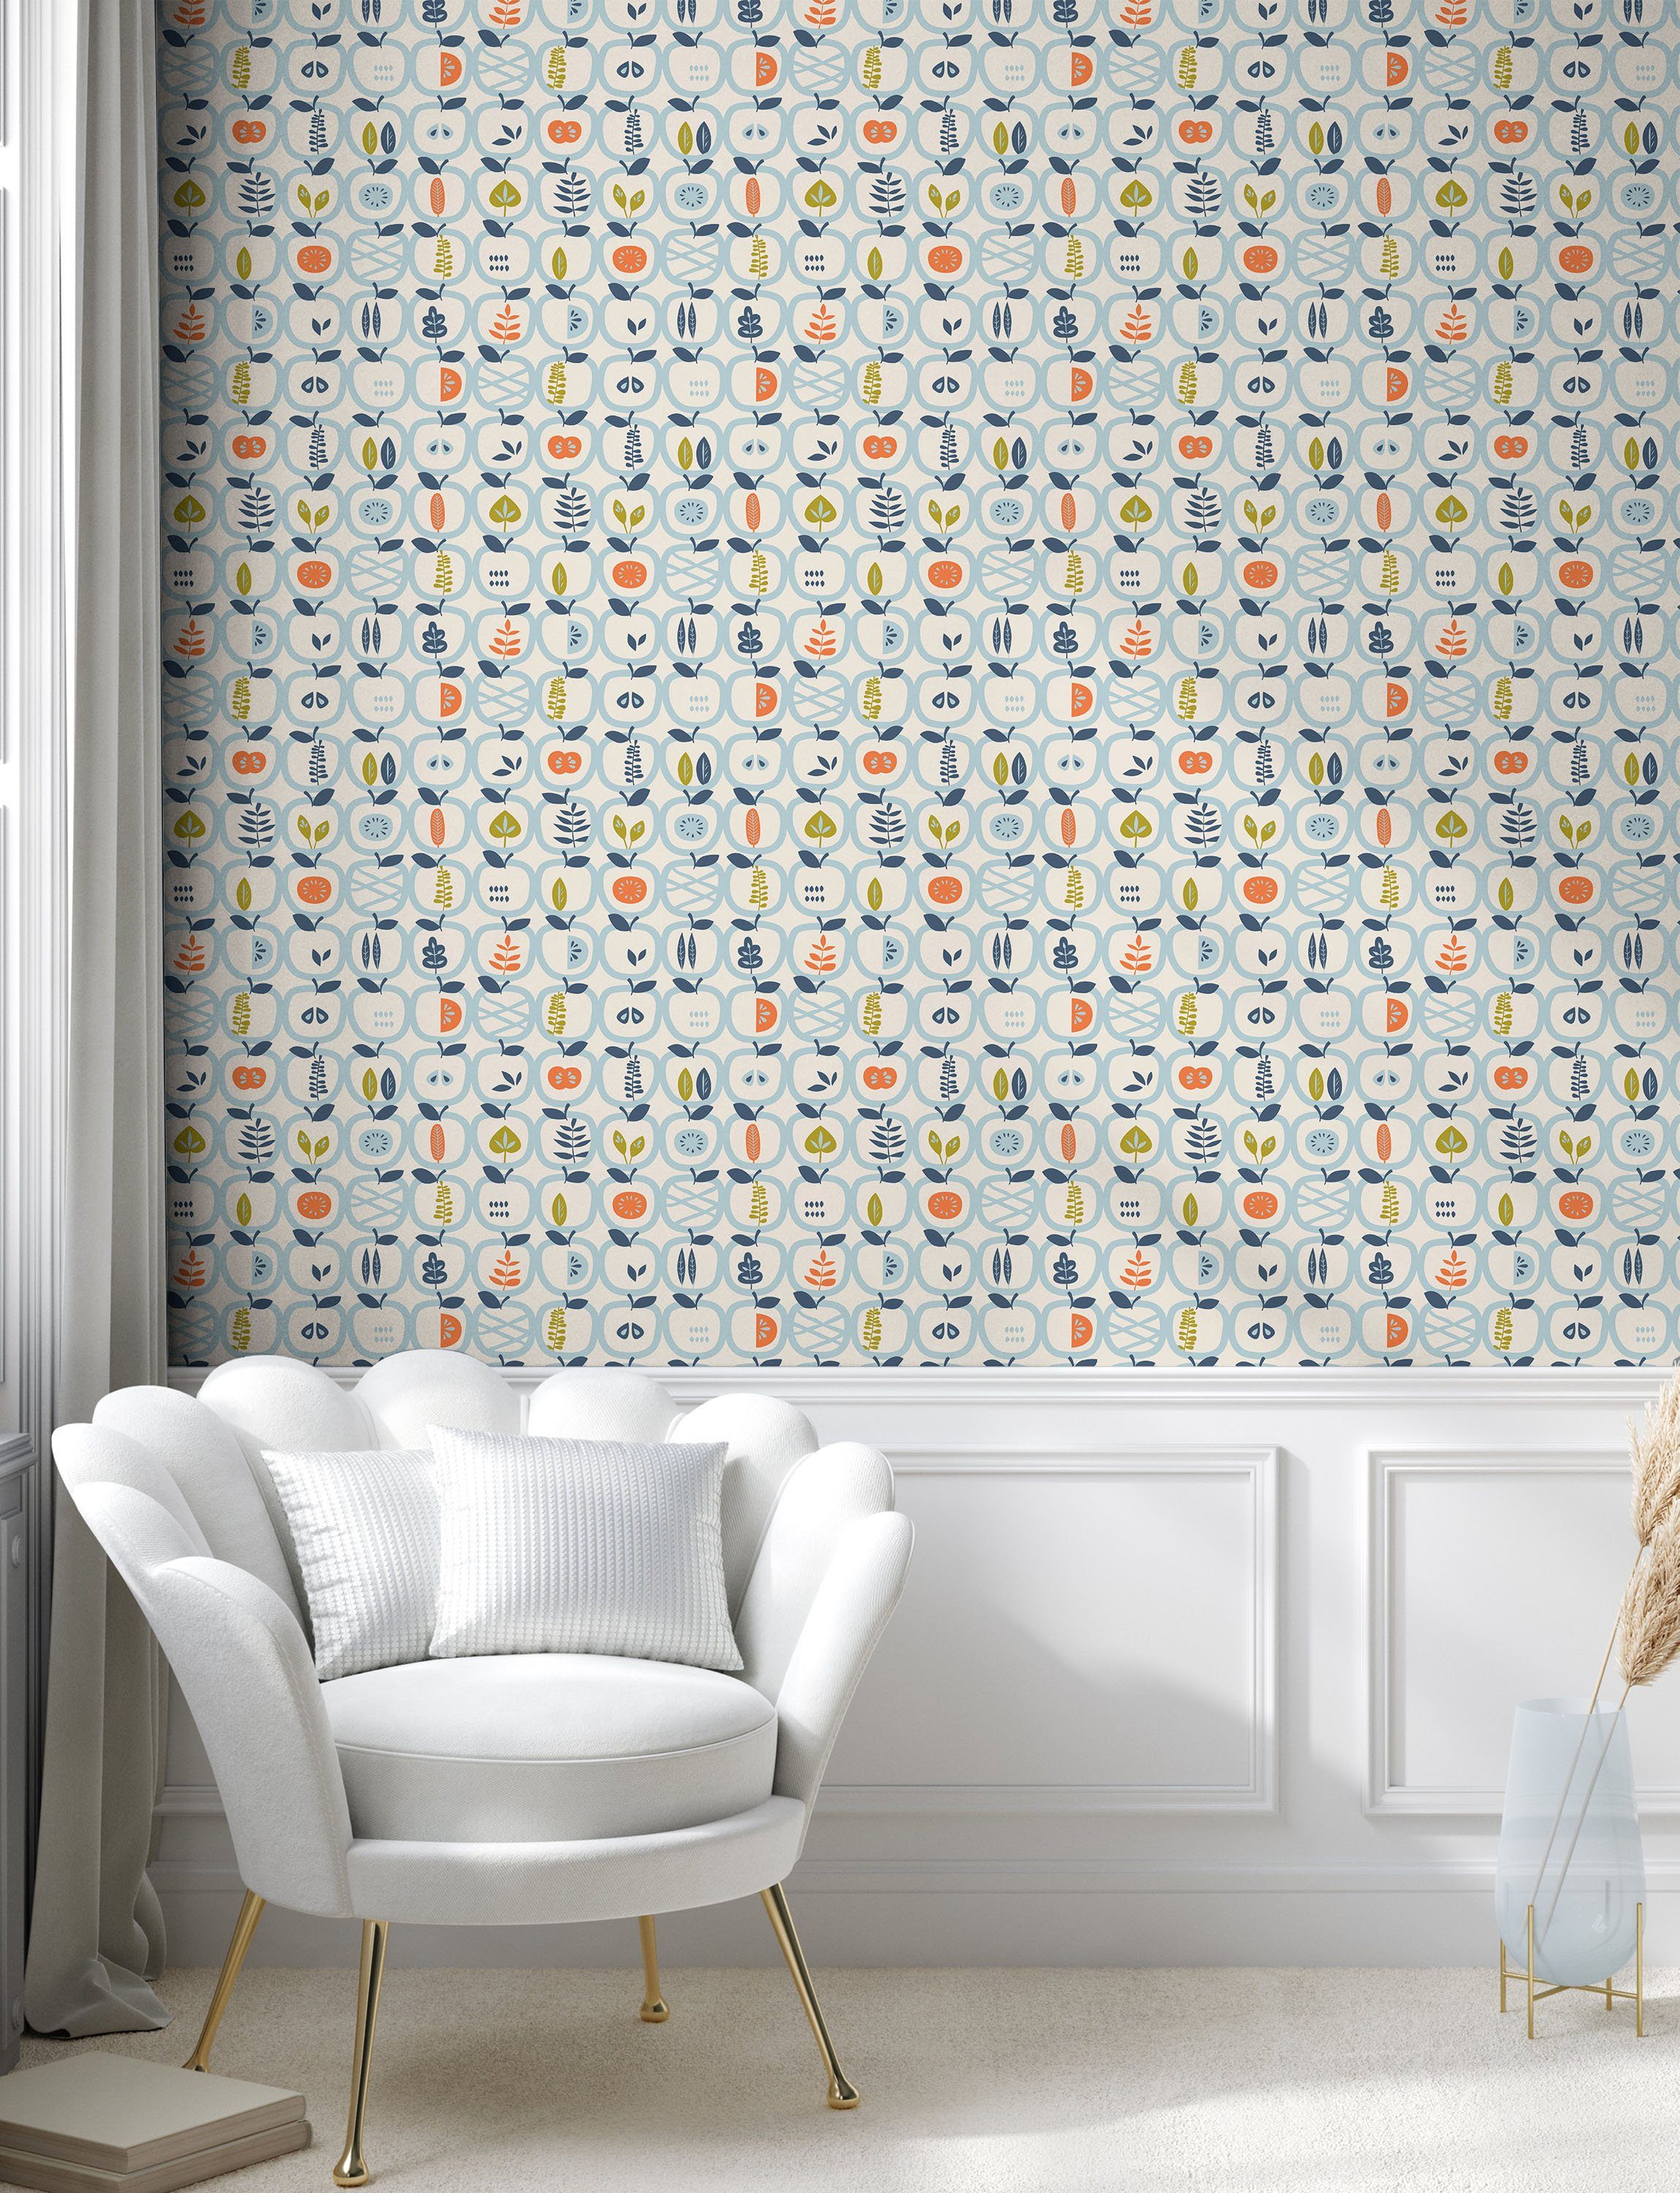 Abakuhaus Wohnzimmer Äpfel Blätter-Muster selbstklebendes Vinyltapete Küchenakzent, skandinavisch